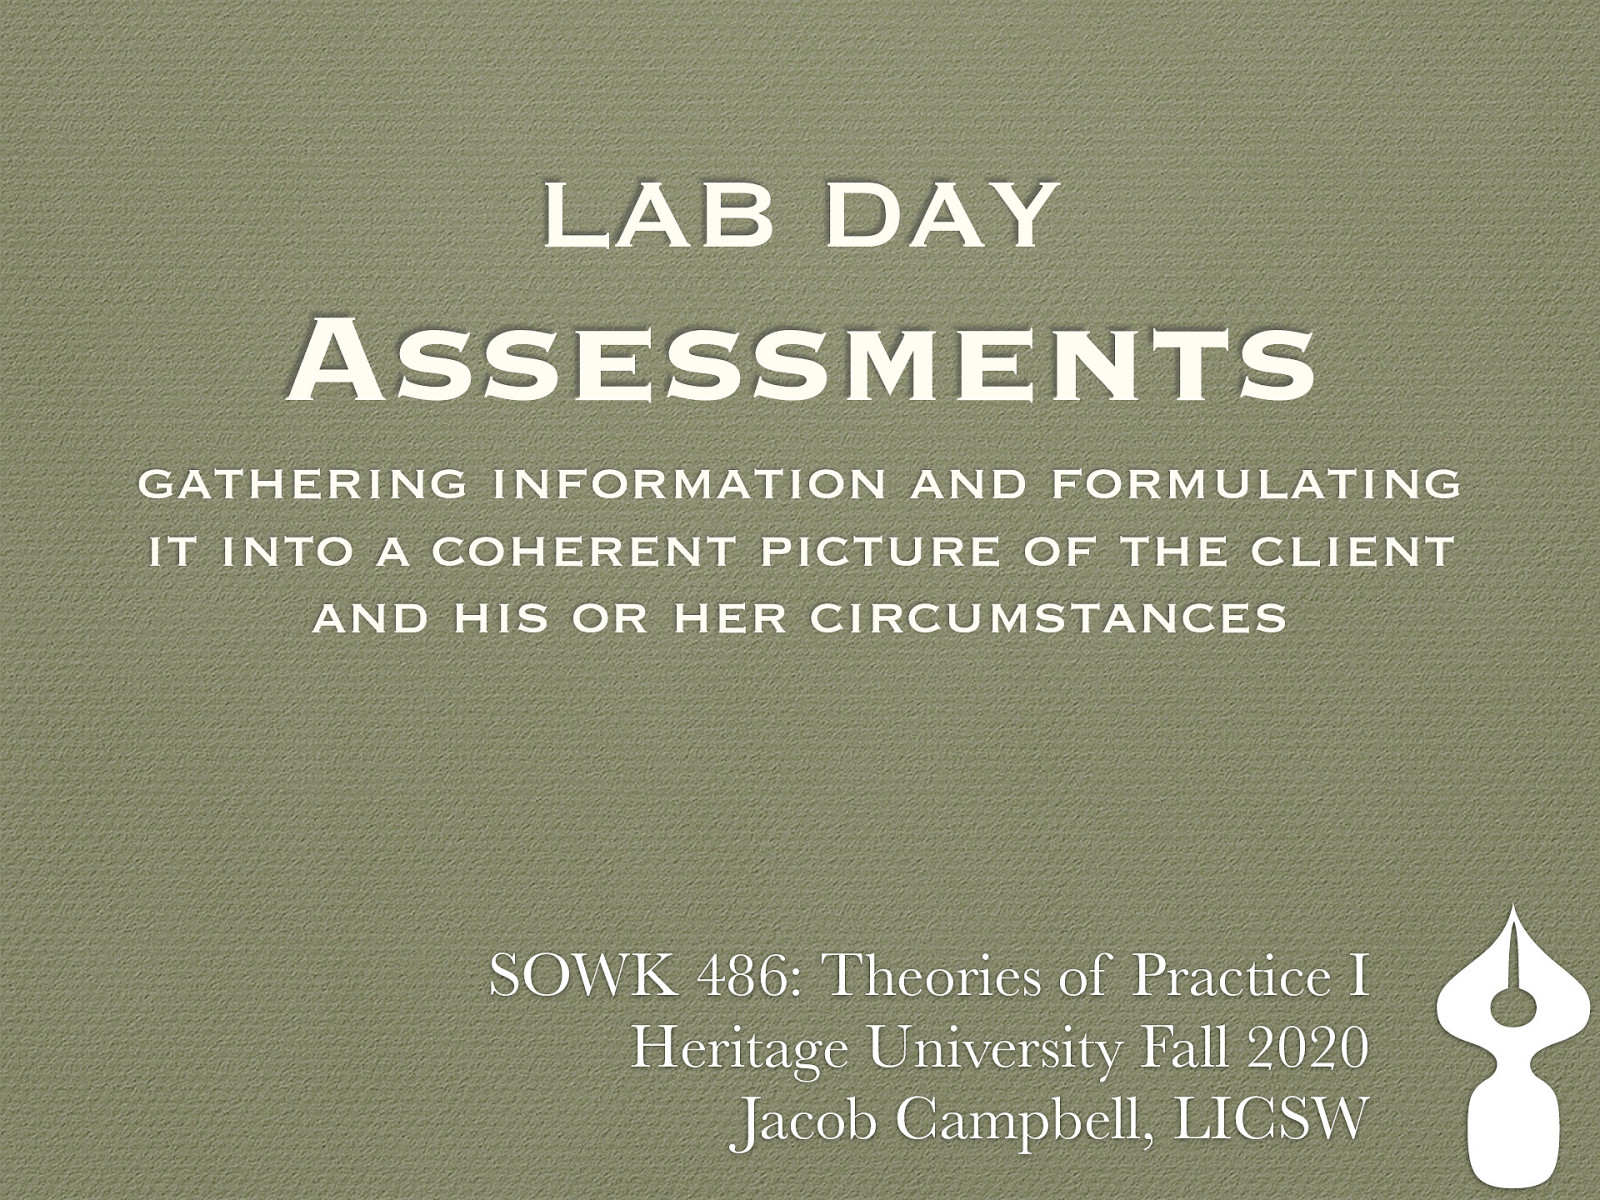 SOWK 486 Week 09: Assessments Continued